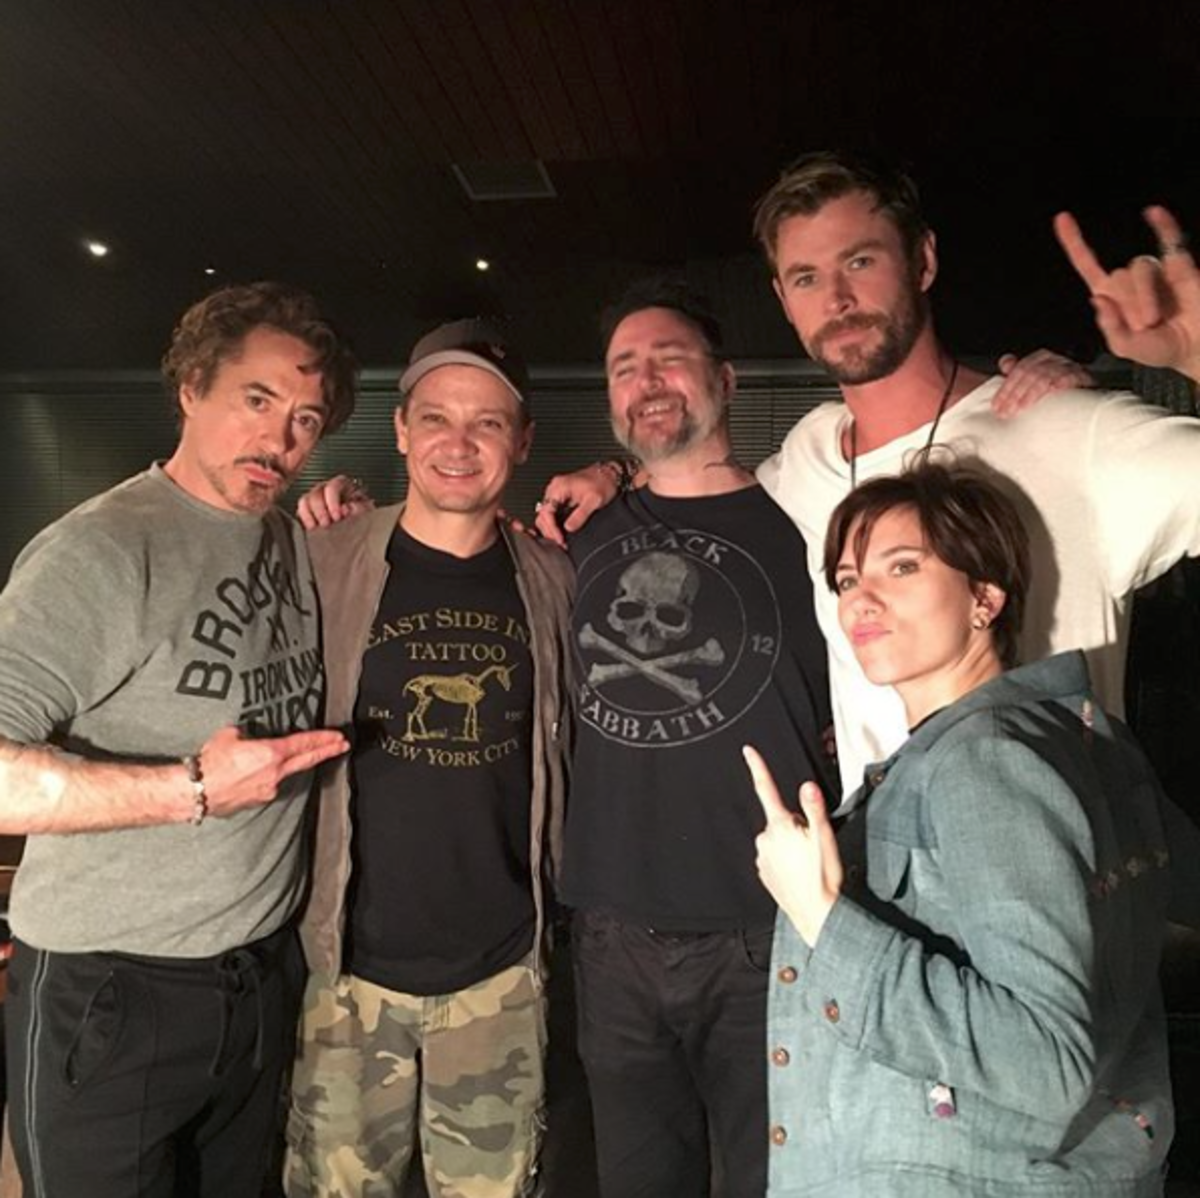 Balról jobbra: Robert Downey Jr., Jeremy Renner, Josh Lord, Chris Hemsworth és Scarlett Johansson